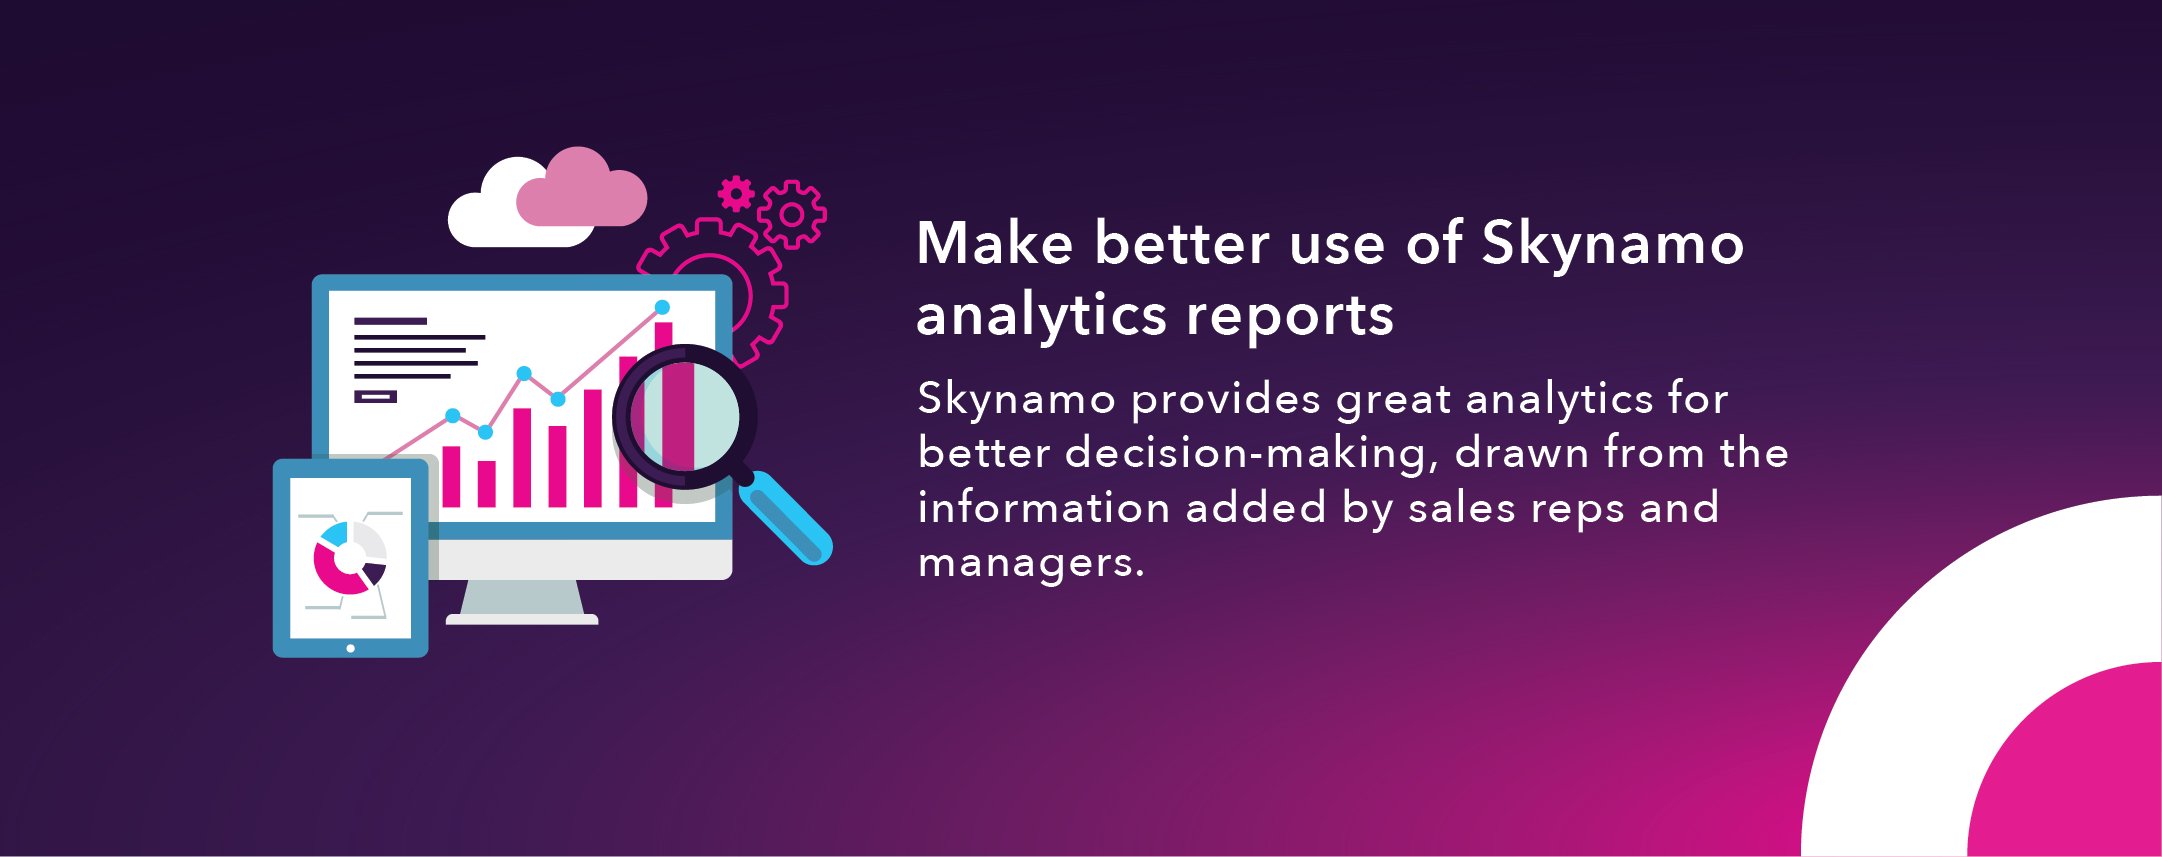 7. Make better use of Skynamo Analytics reports